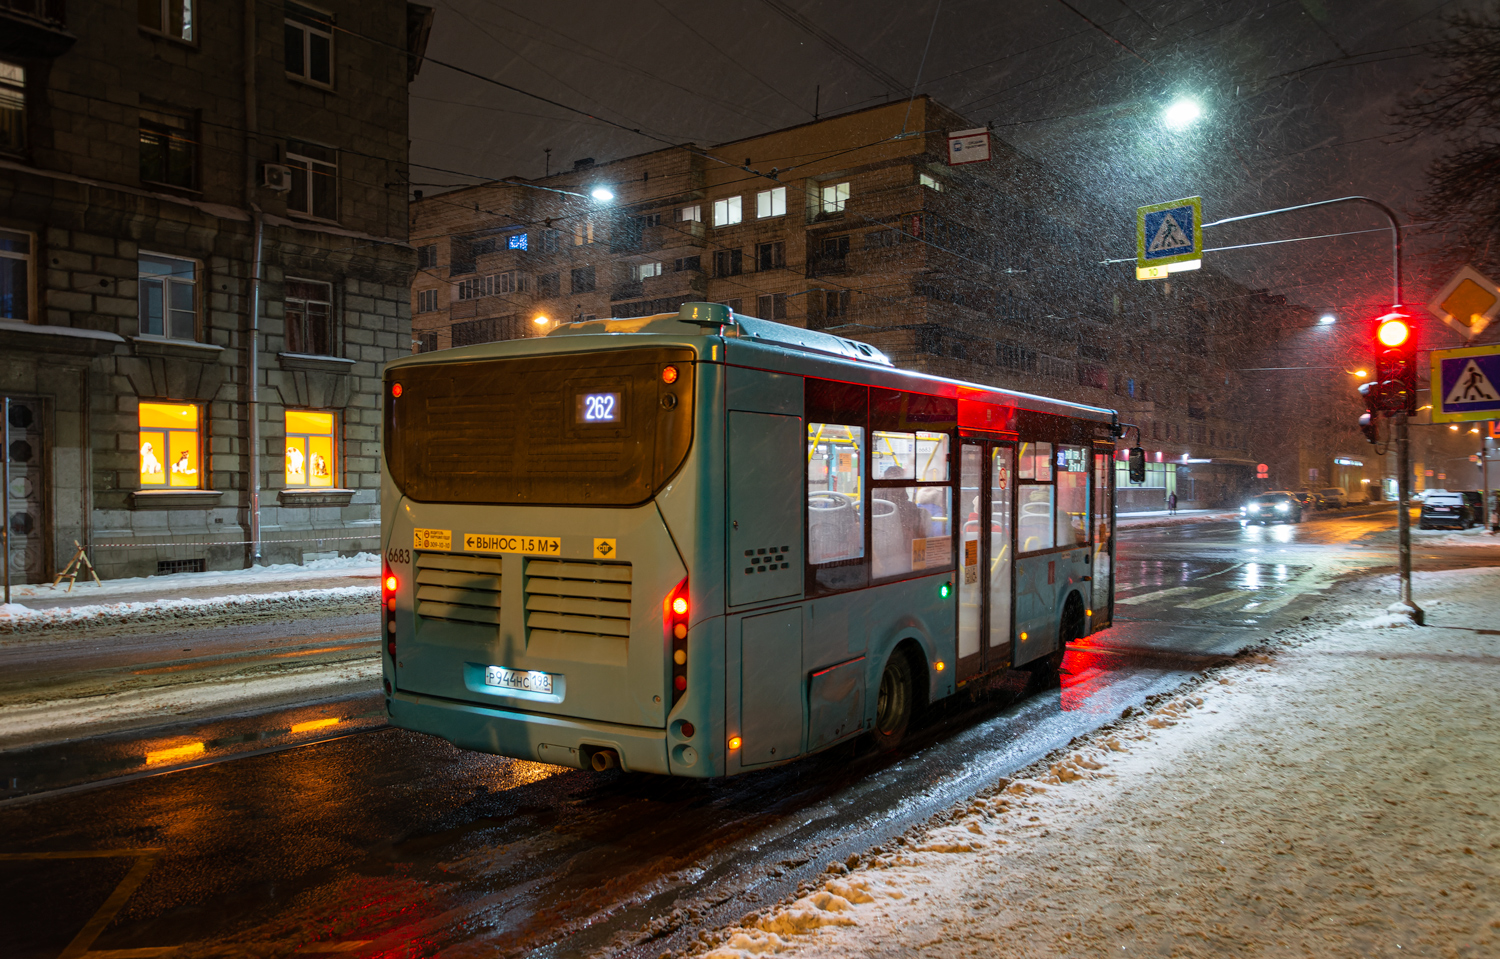 Petersburg, Volgabus-4298.G4 (LNG) # 6683